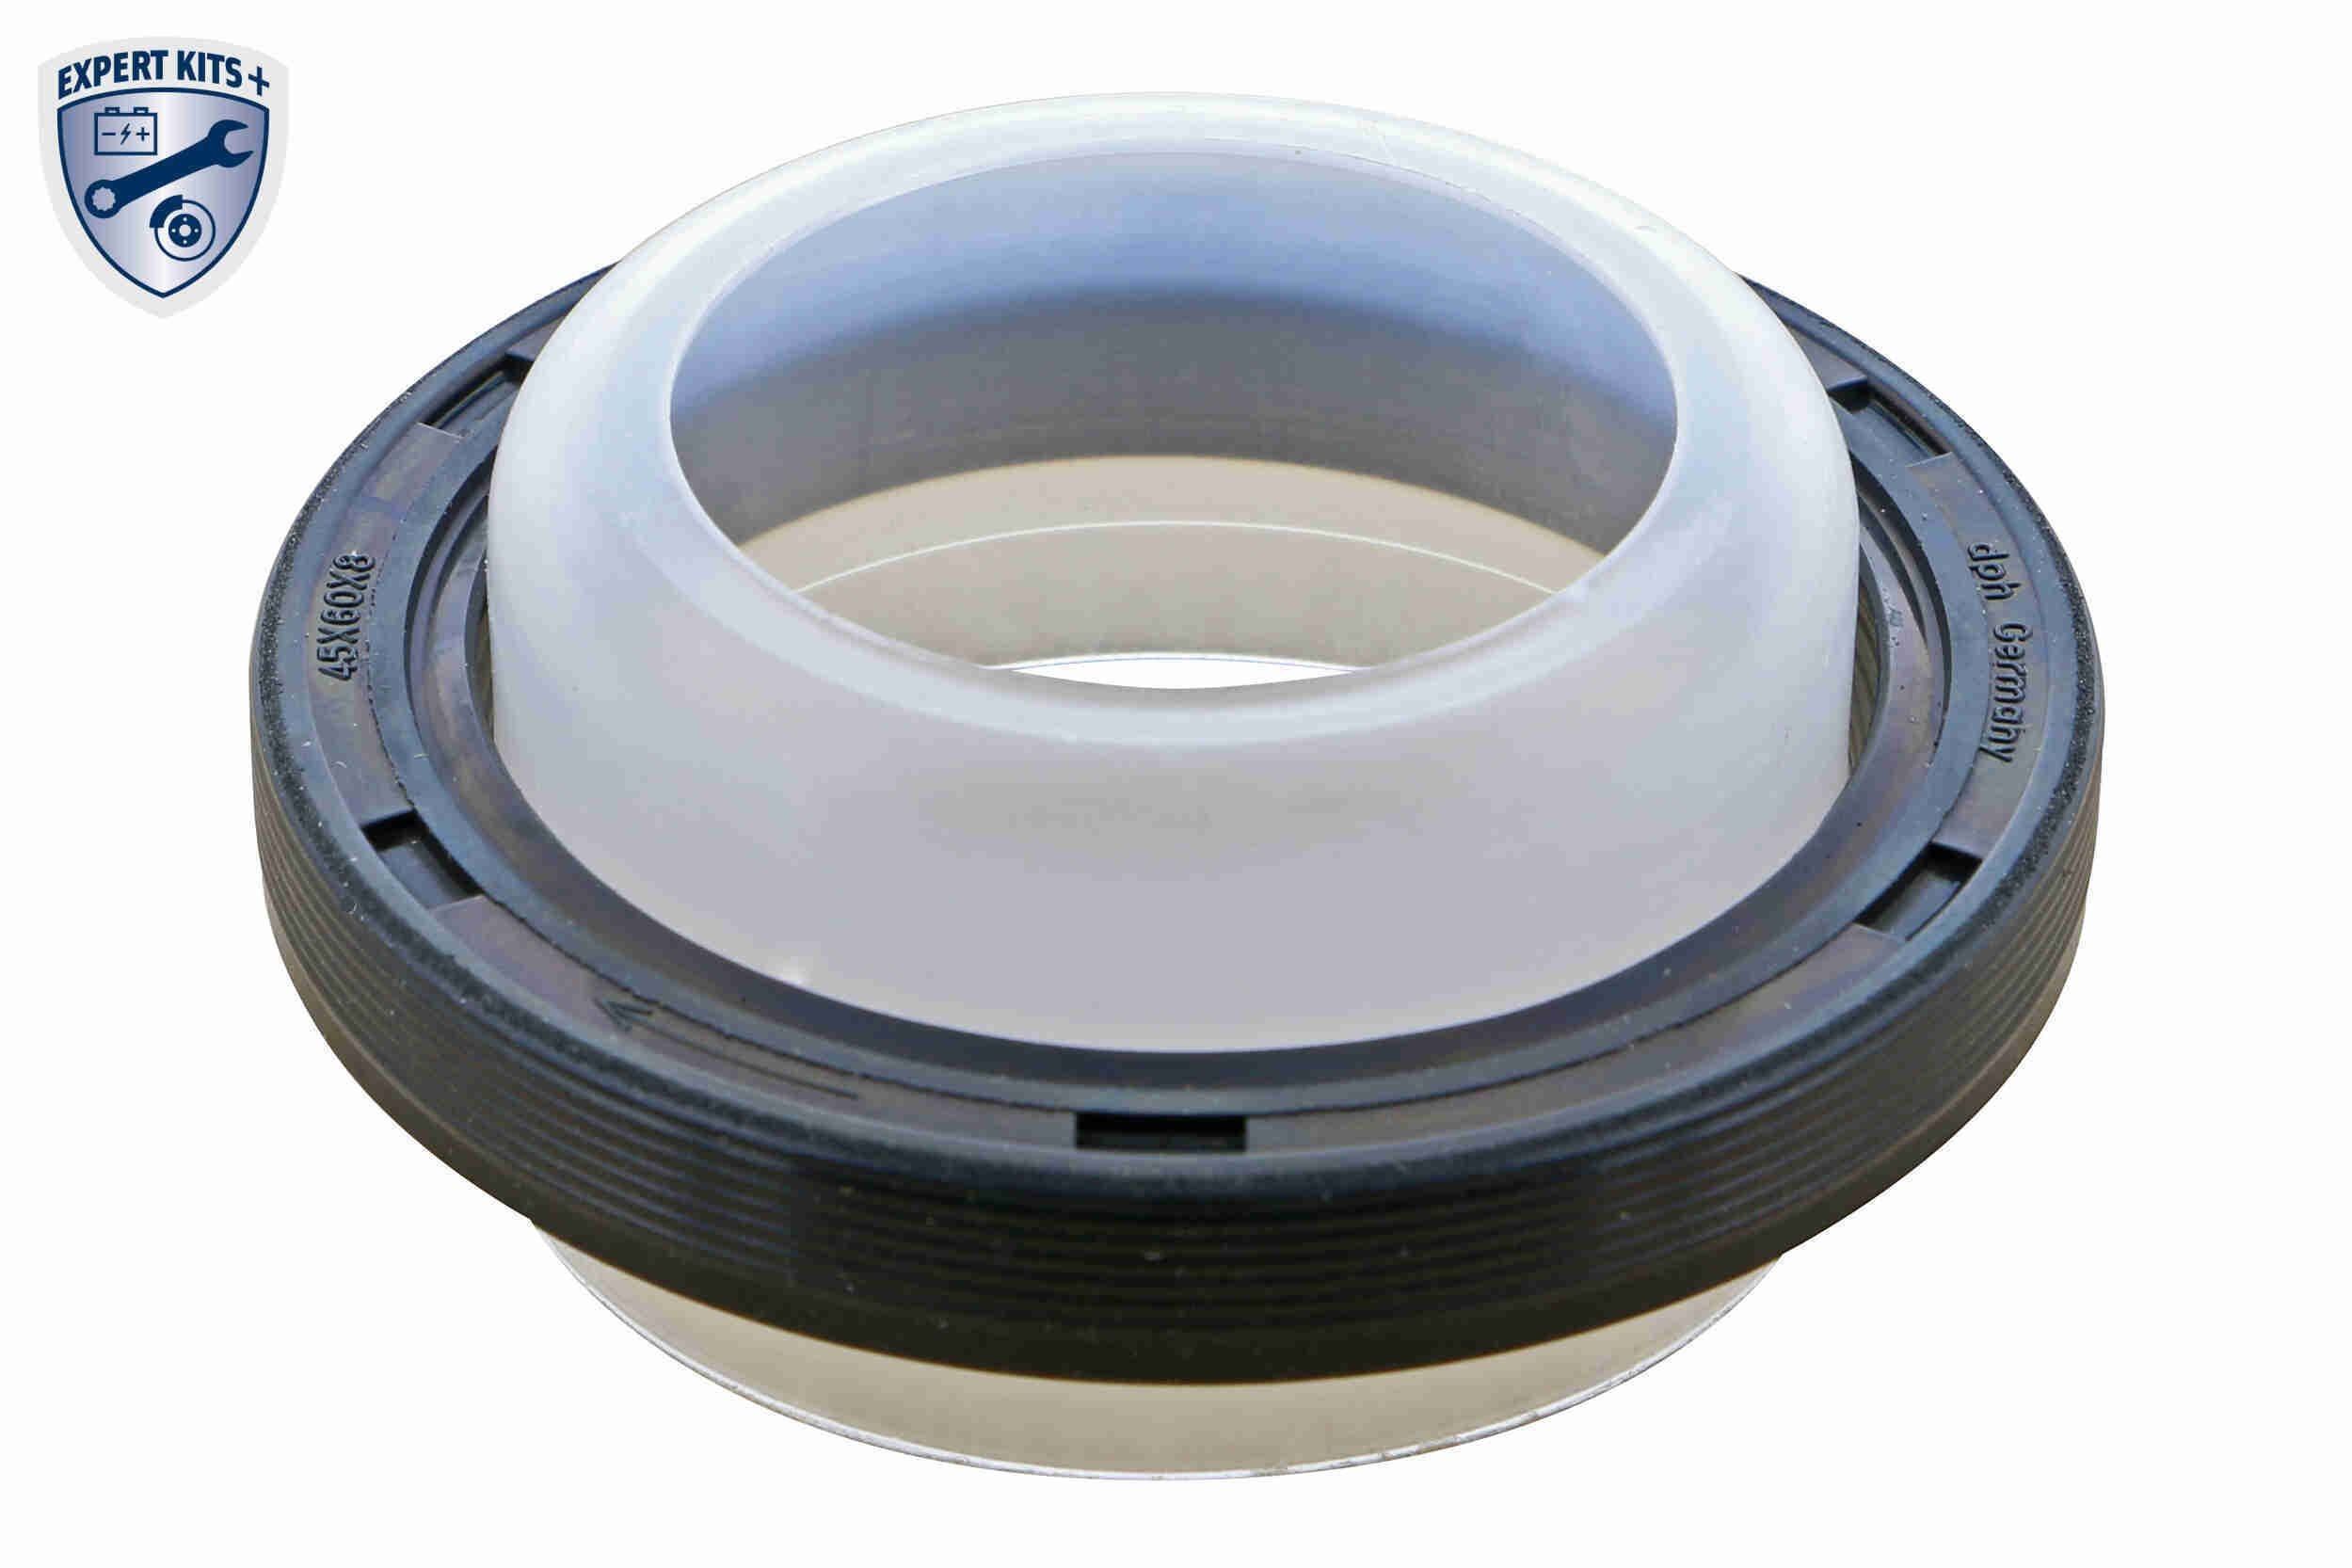 V10-4858 VAICO Crankshaft oil seal HYUNDAI Q+, original equipment manufacturer quality, frontal sided, FPM (fluoride rubber)